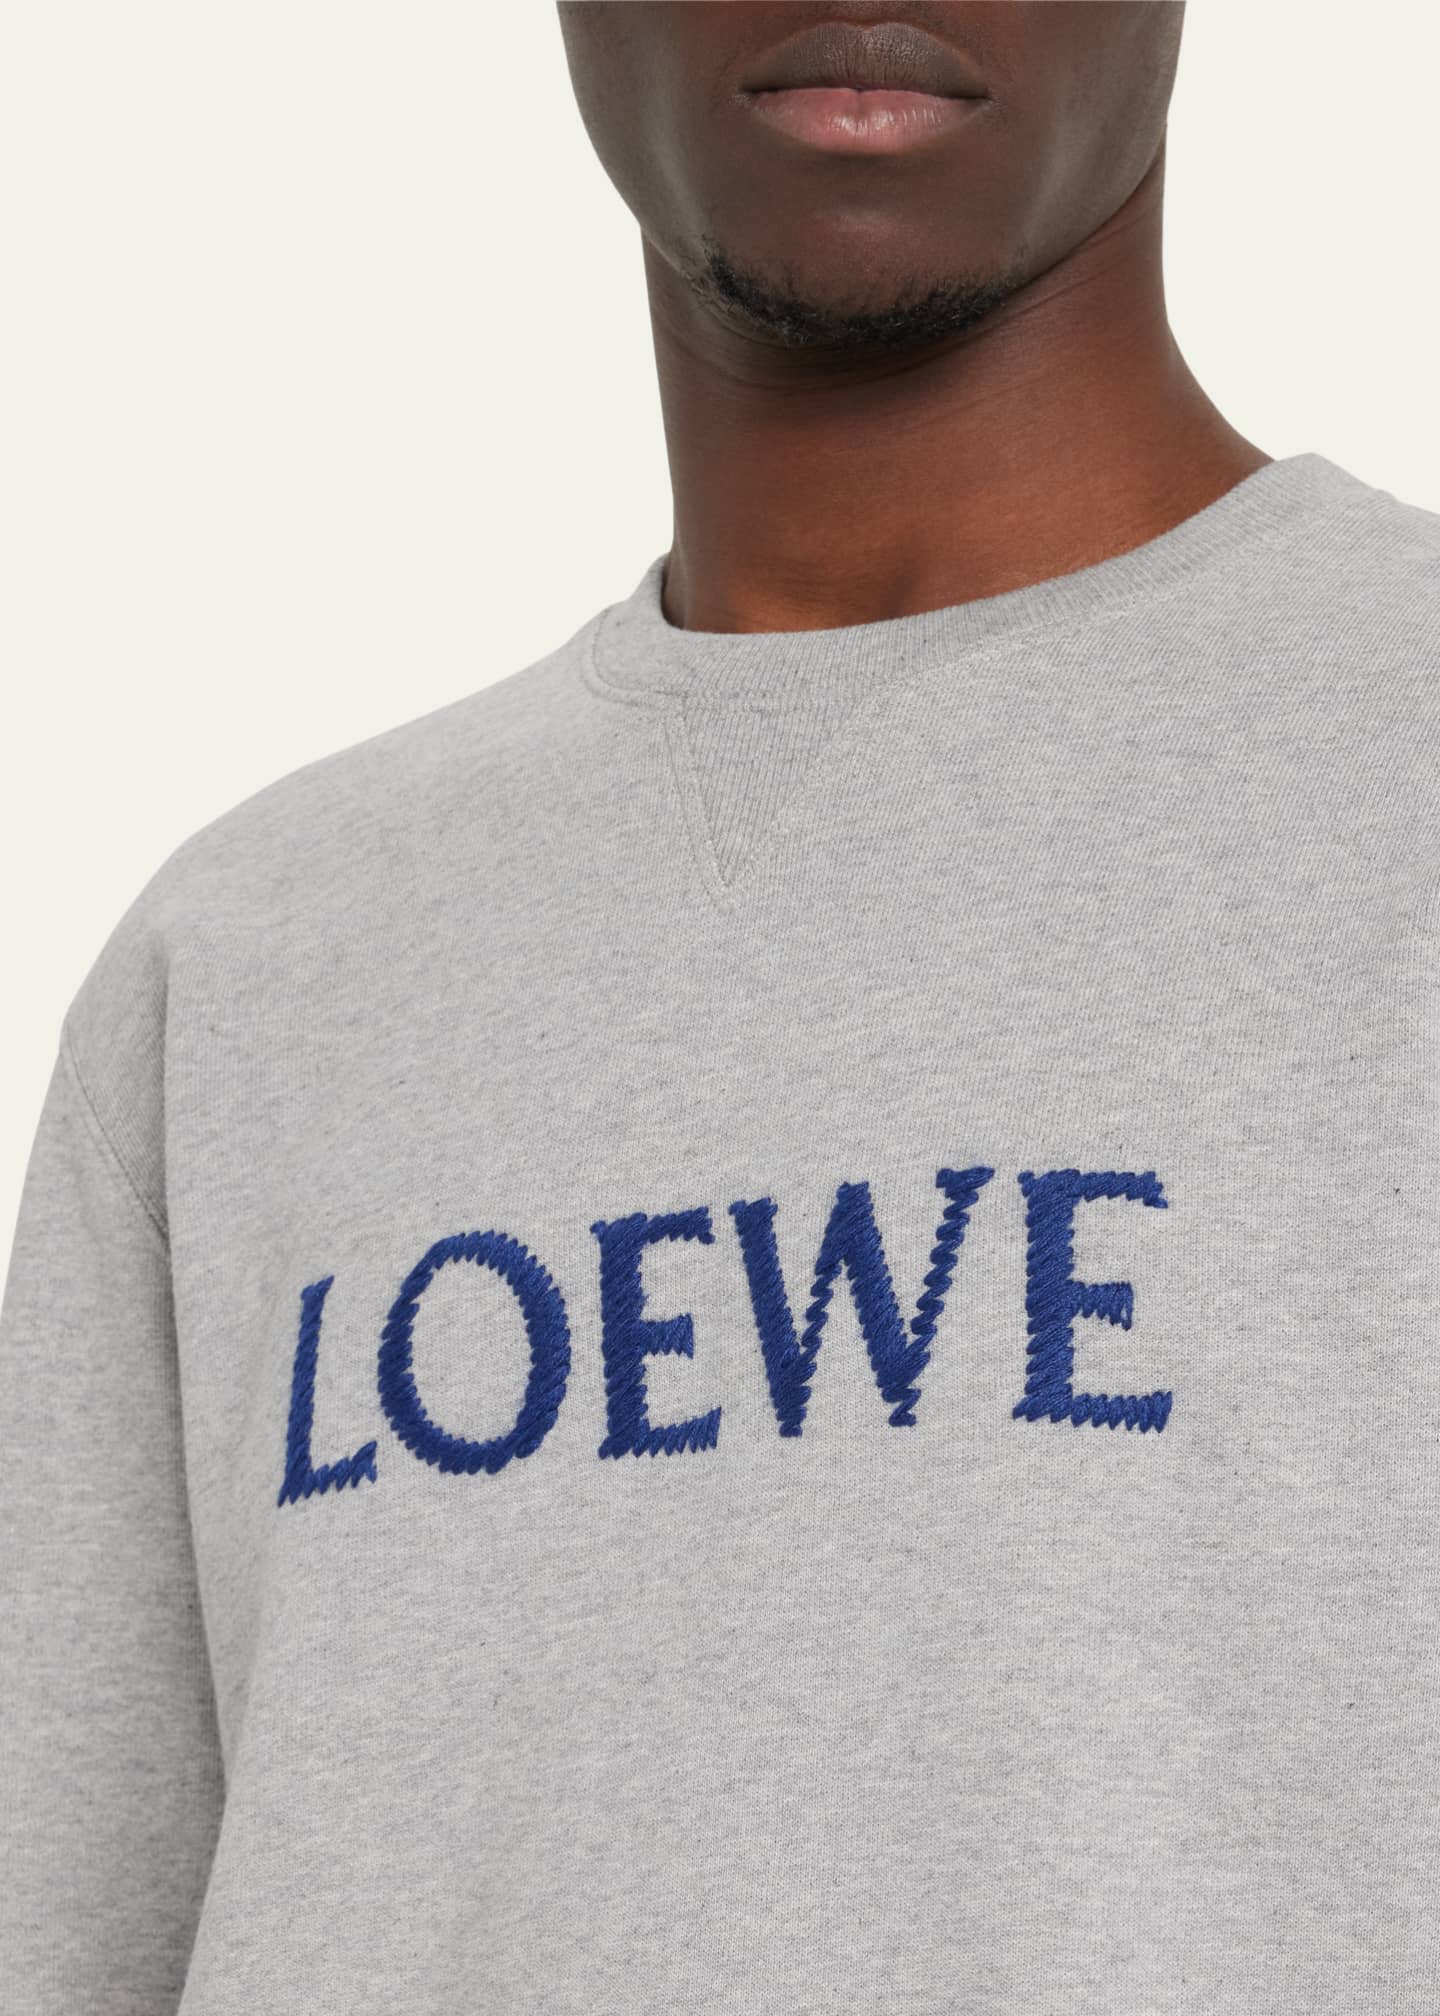 Loewe Men's Embroidered Logo Sweatshirt